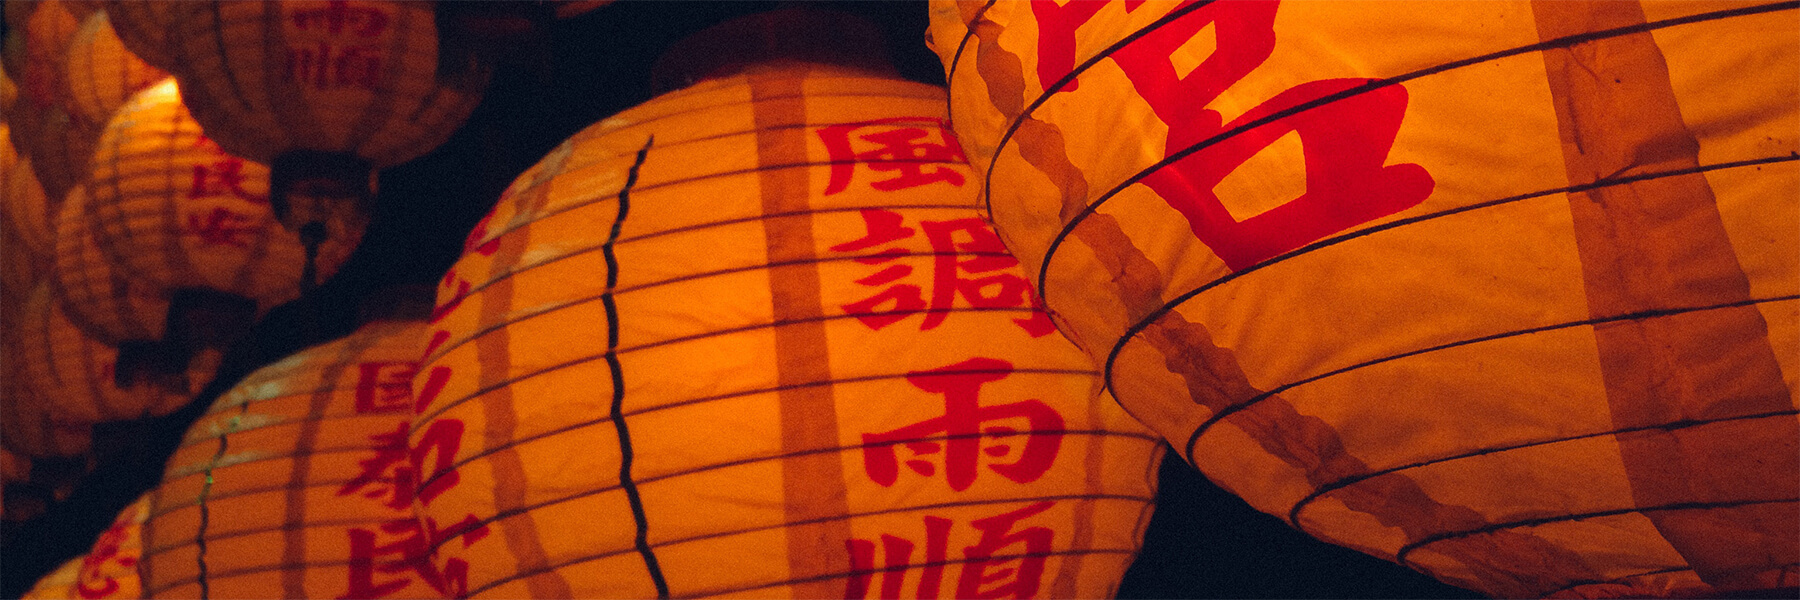 Chinese ball lanterns